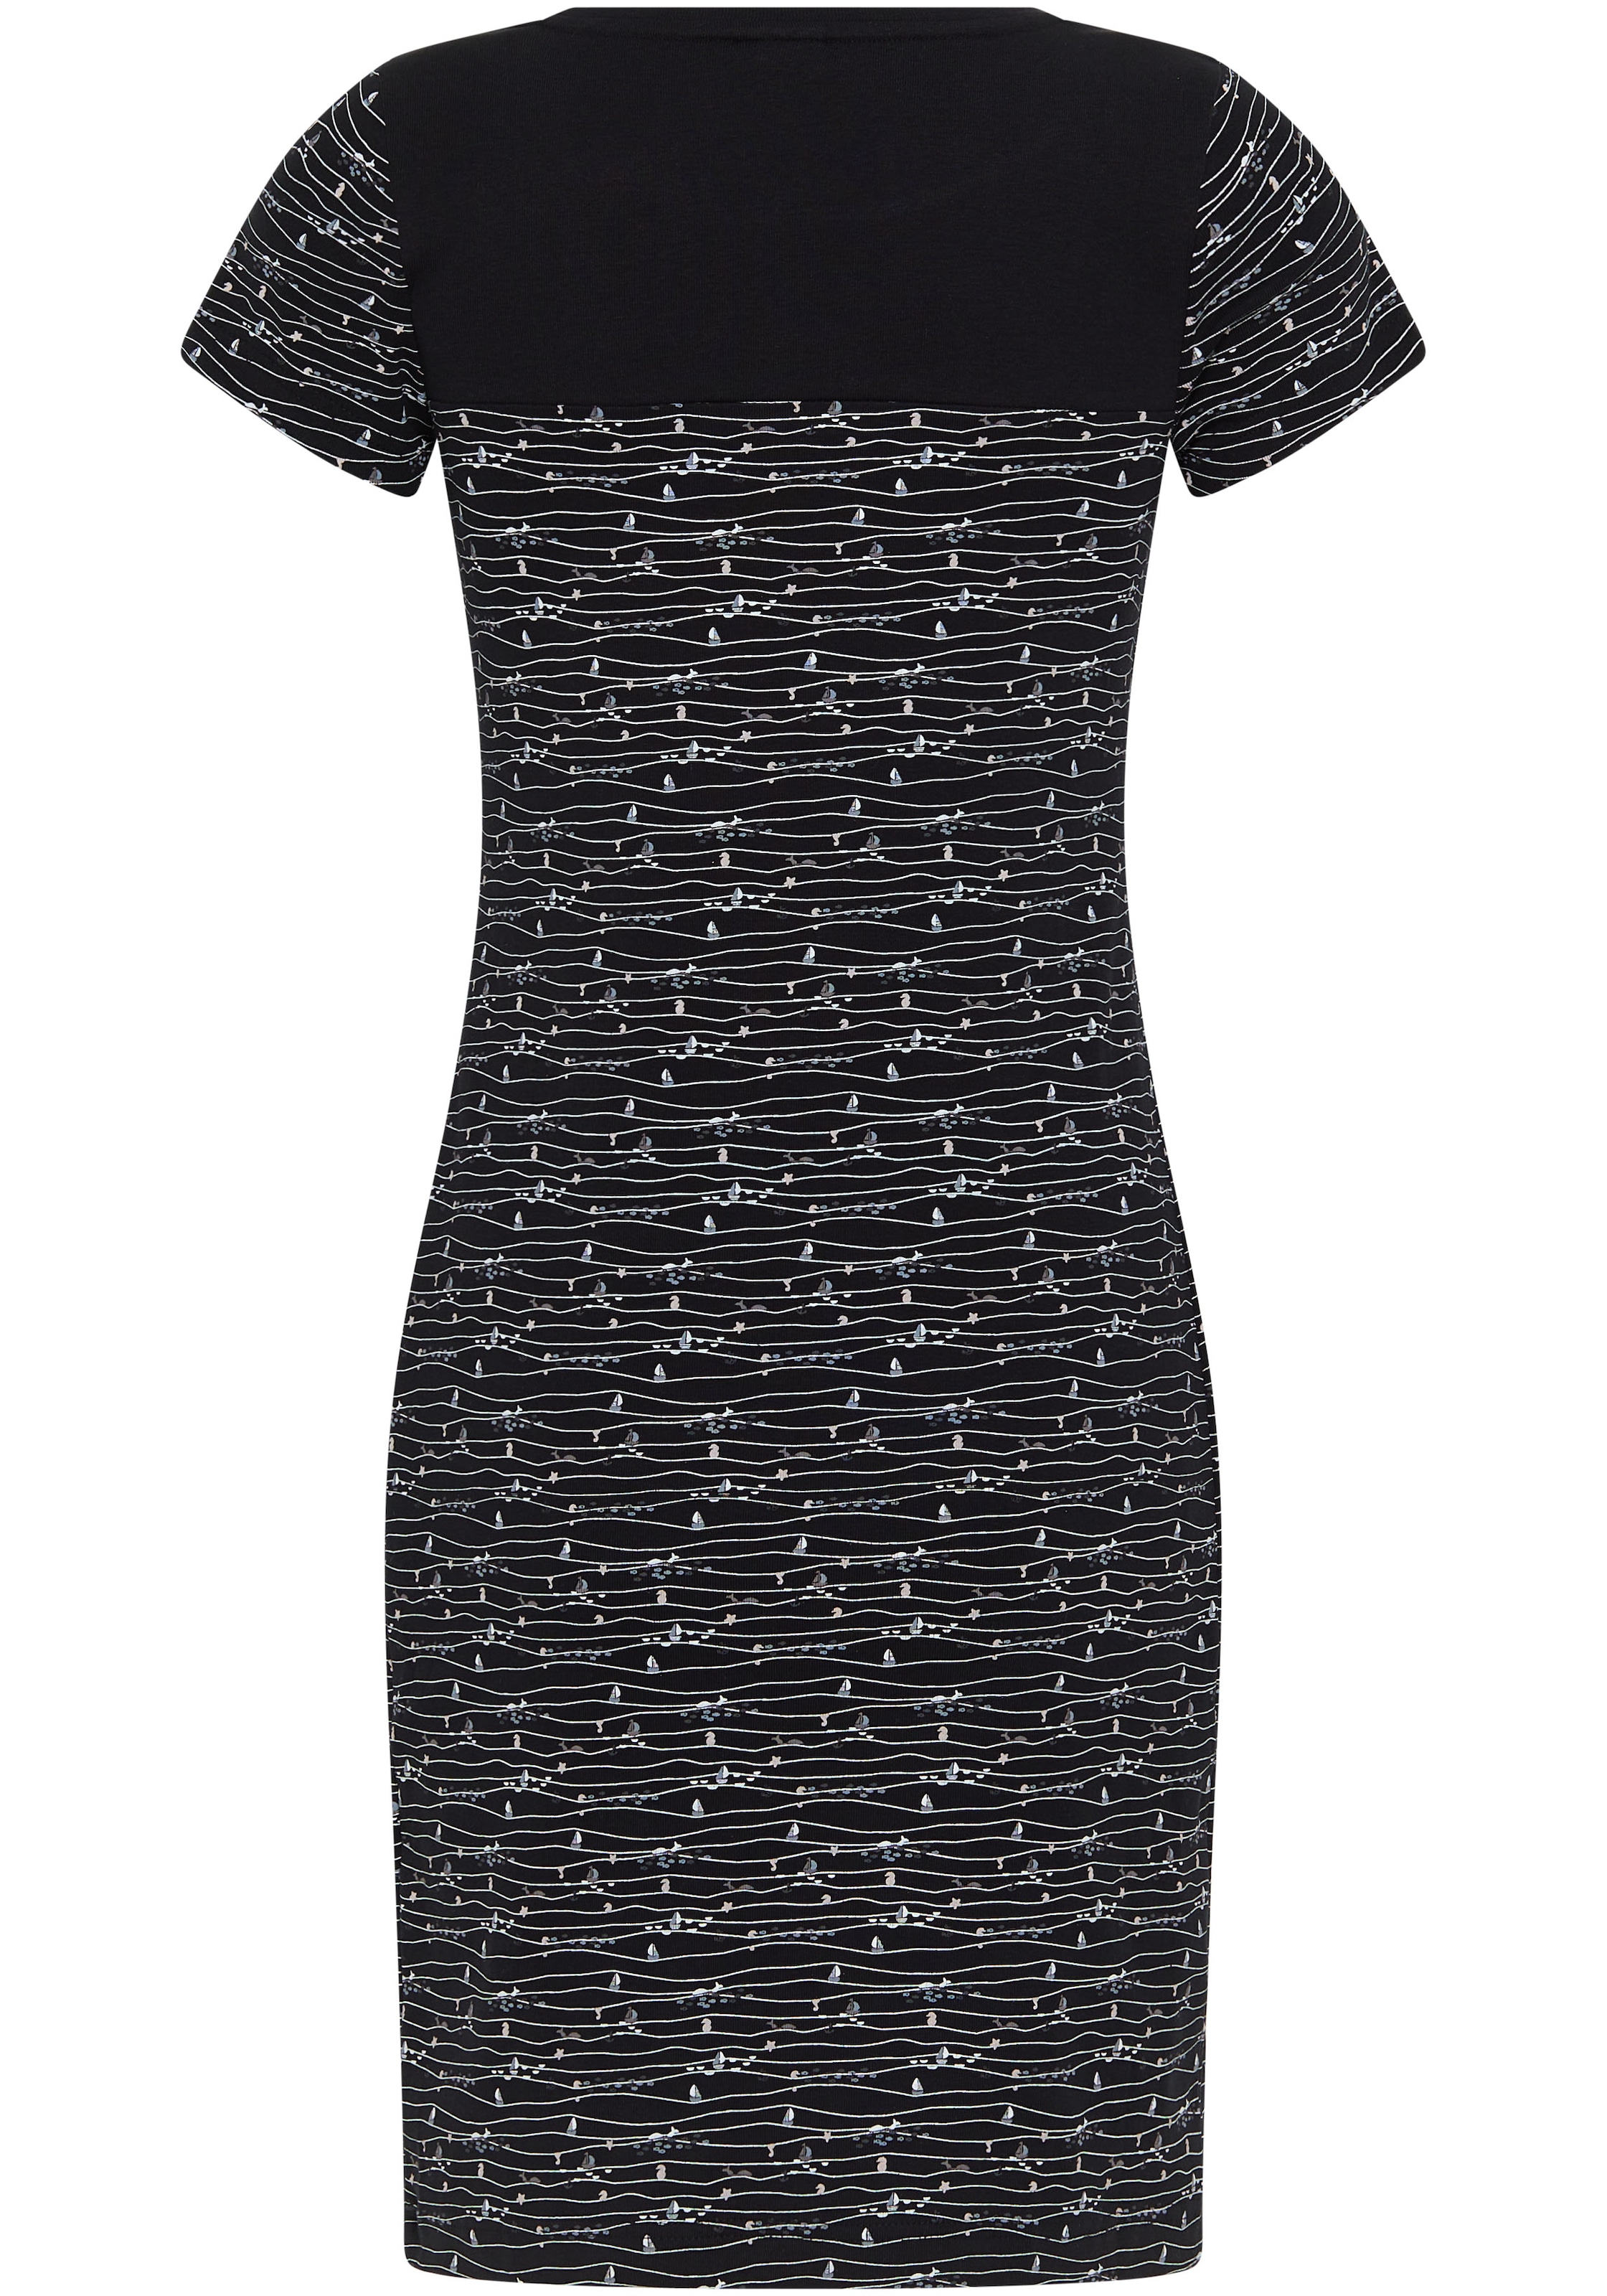 KangaROOS Jerseykleid, mit trendigem Allover-Druck - NEUE-KOLLEKTION